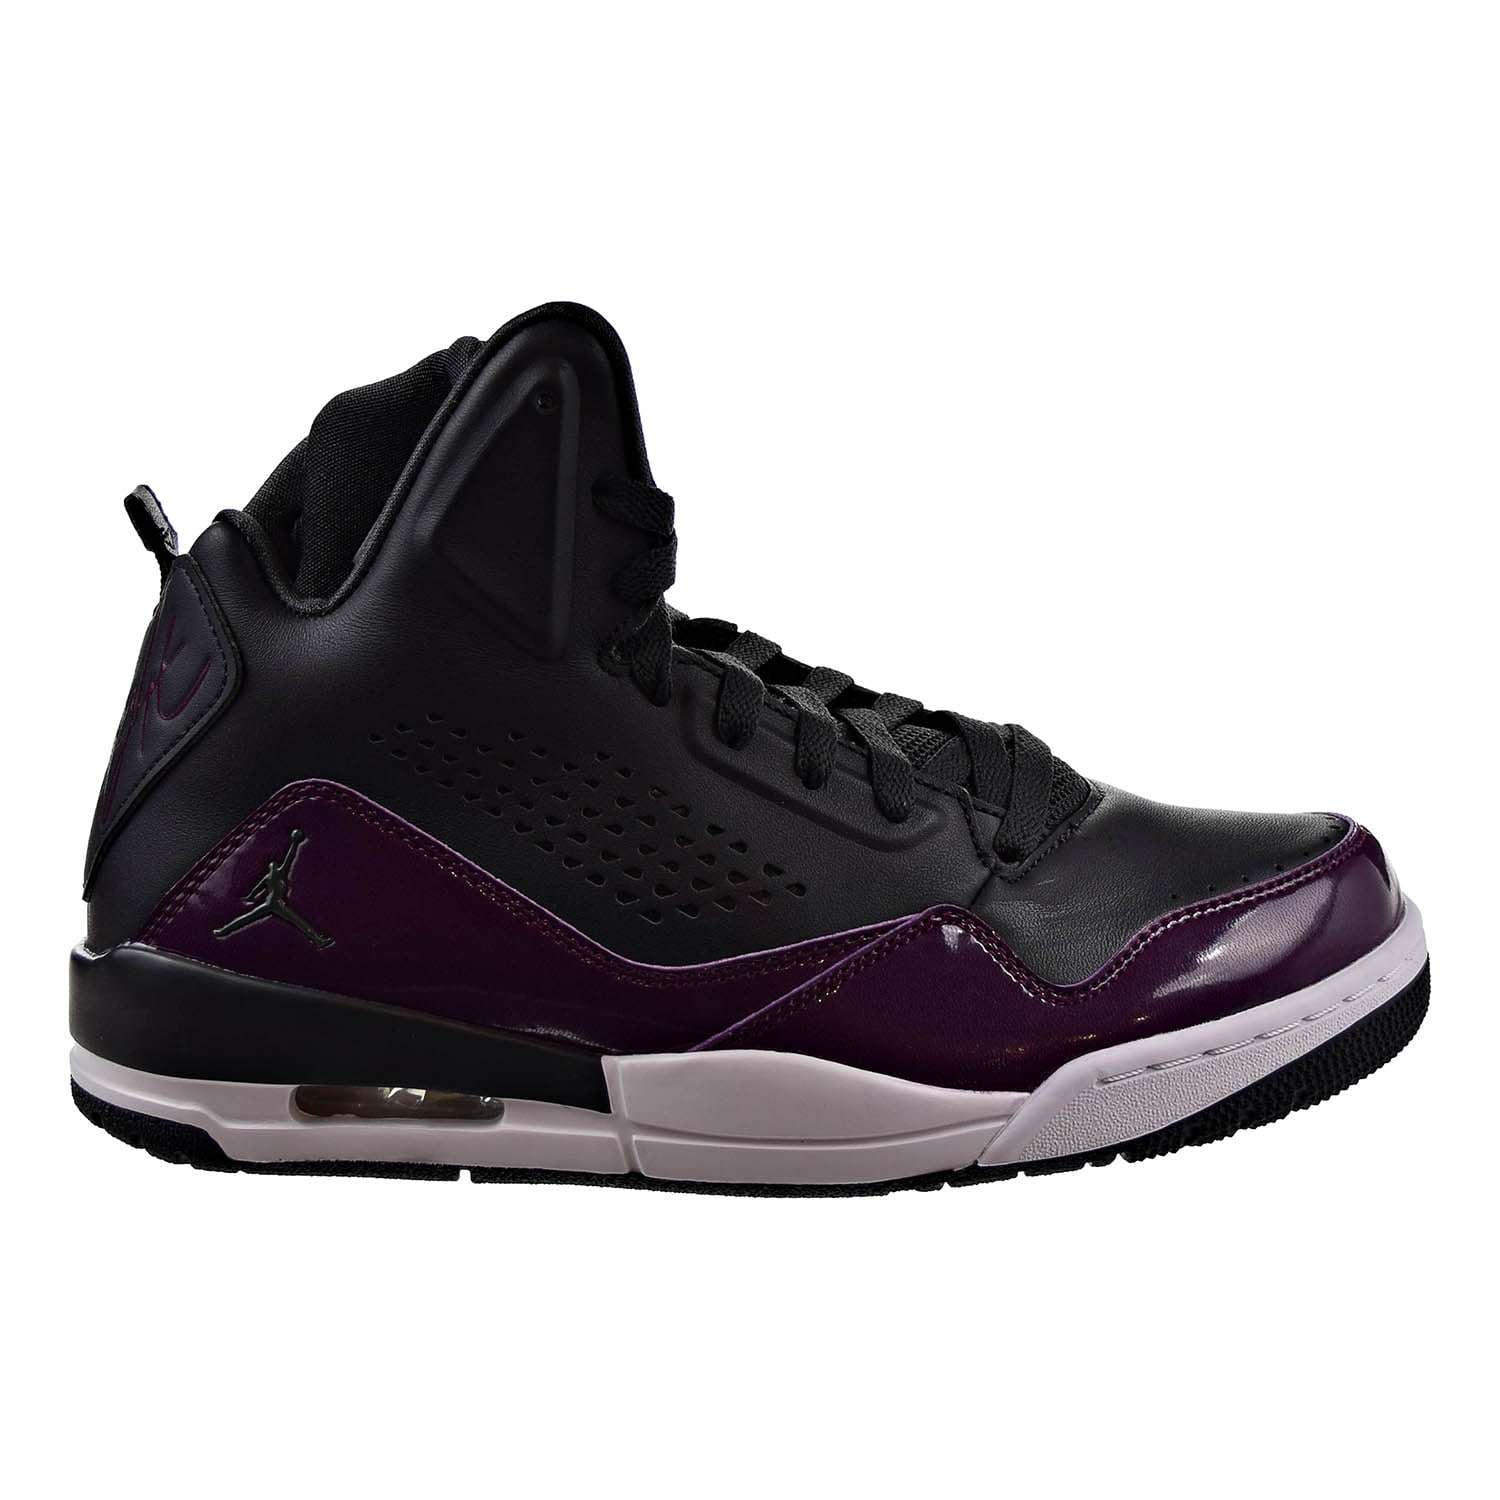 Jordan SC-3 Men's Basketball Shoes Anthracite/Anthracite-Bordeaux  629877-022